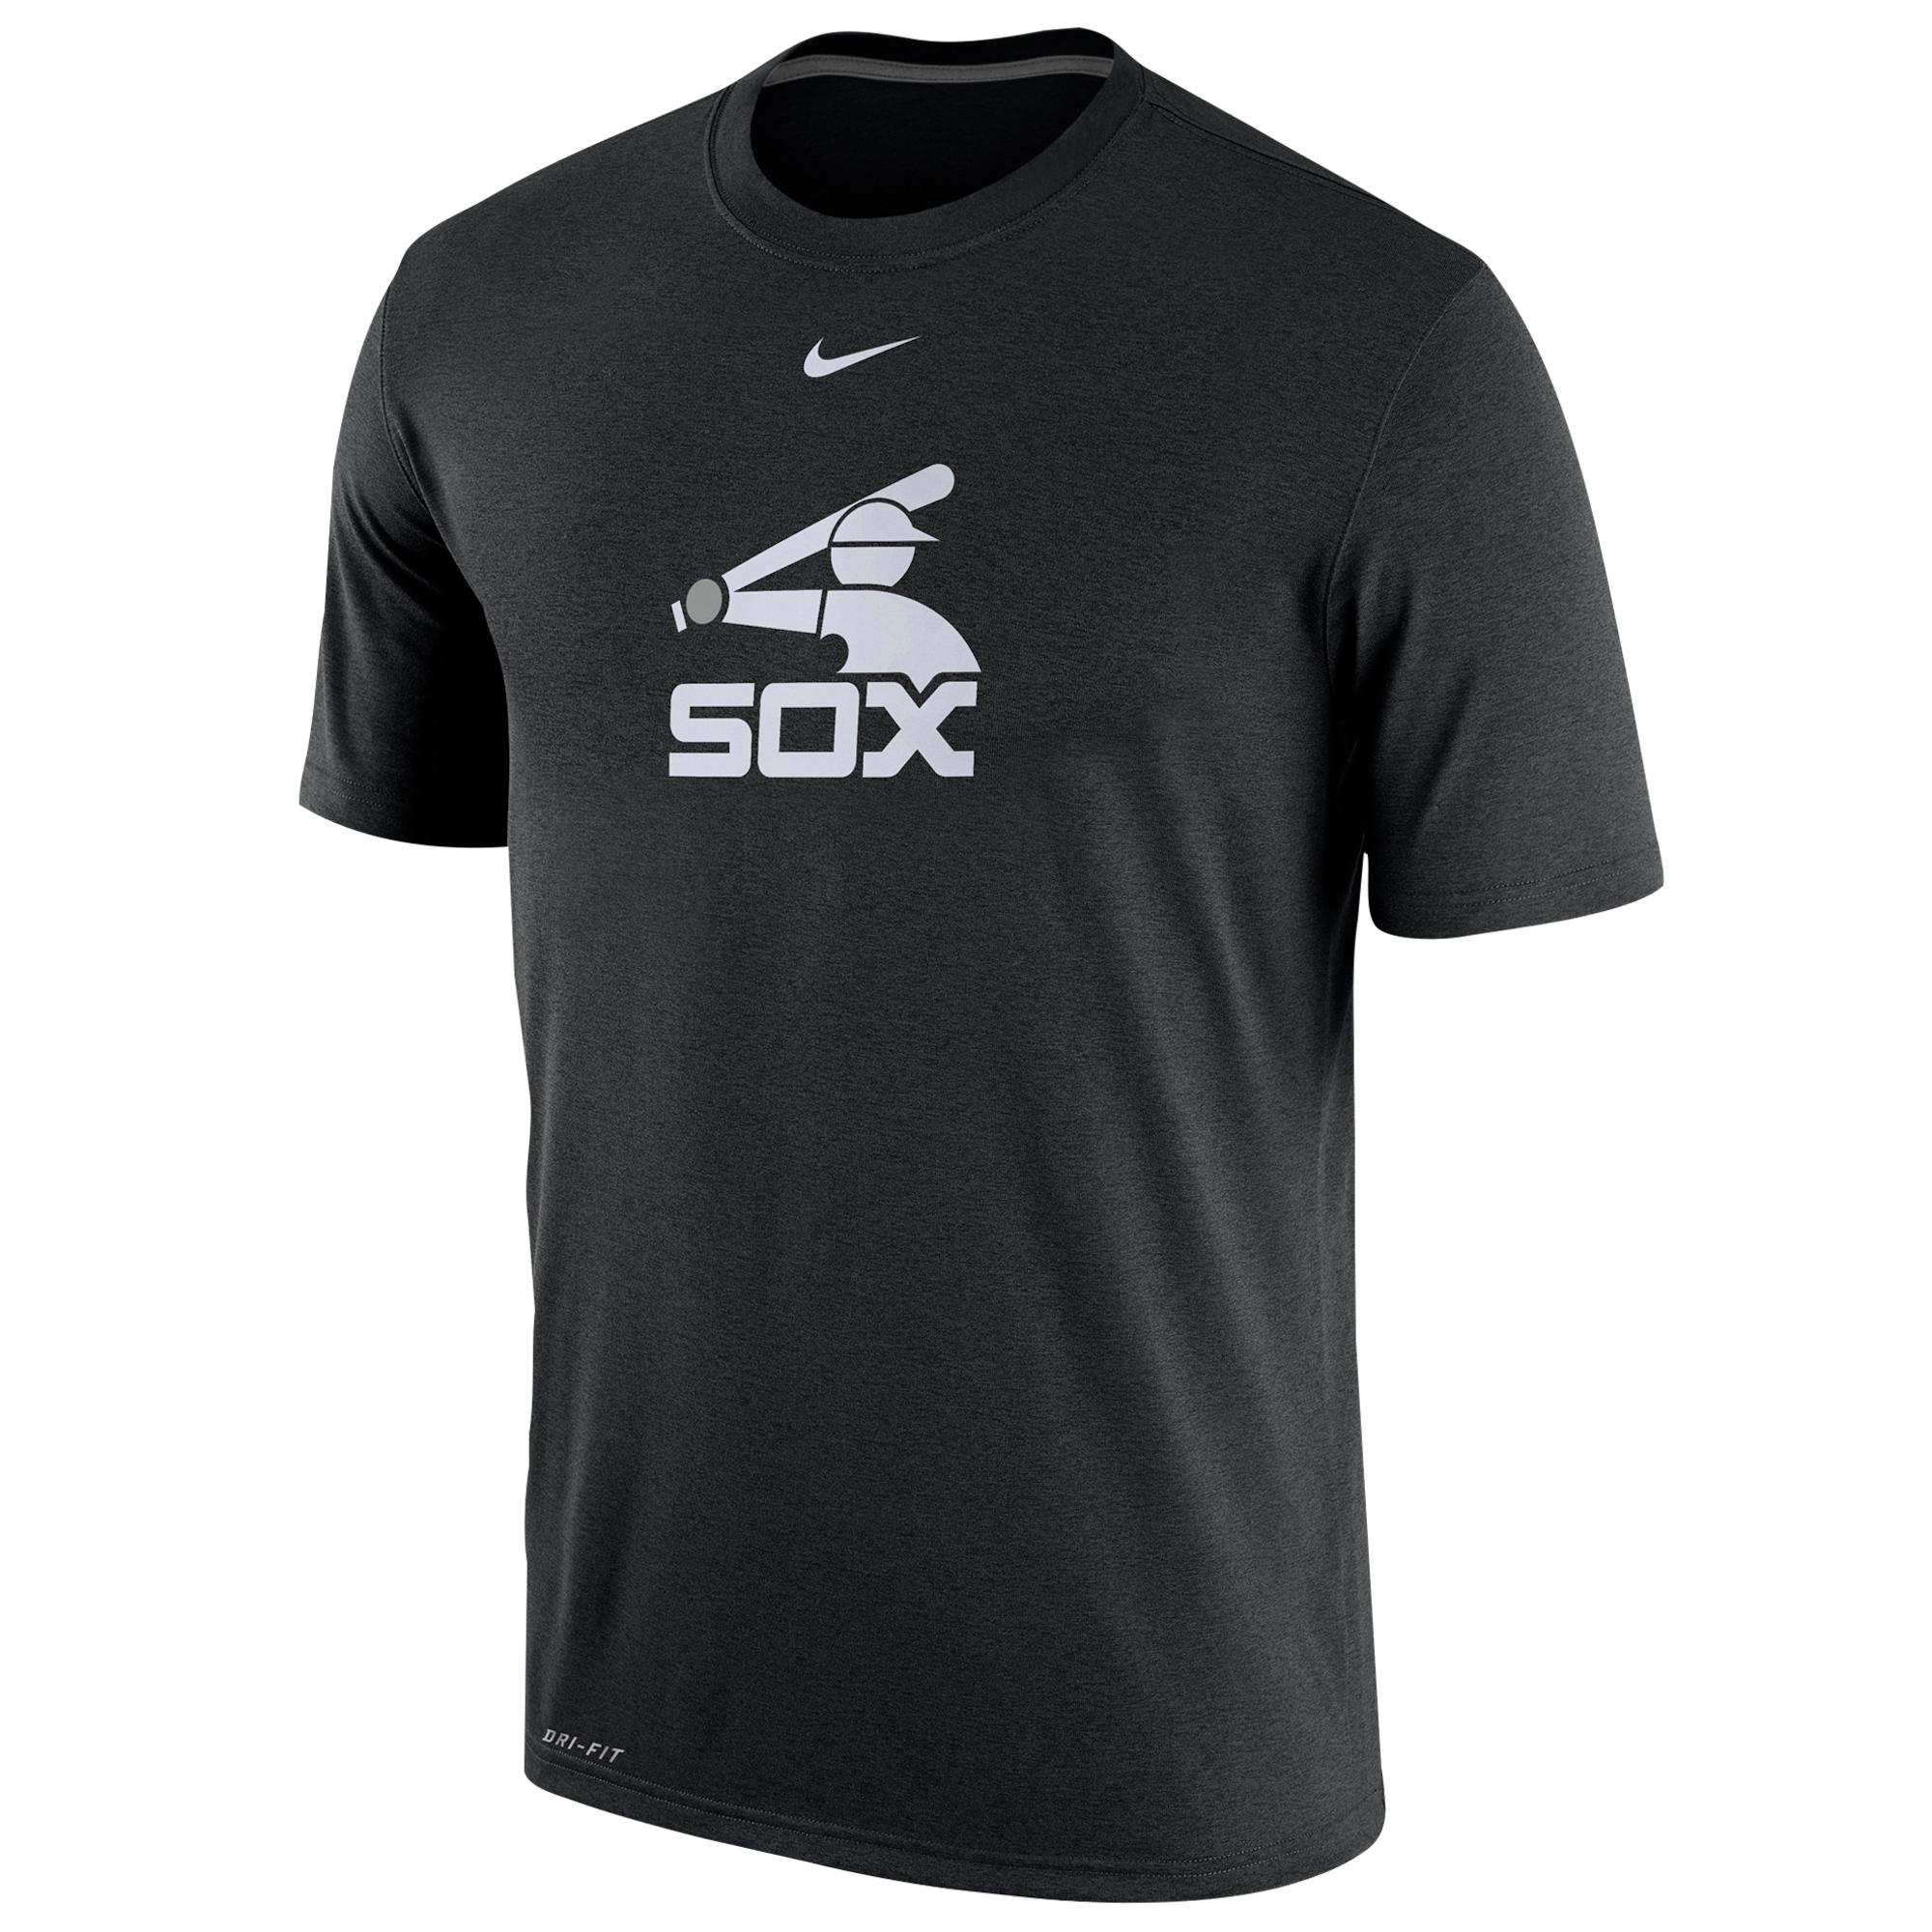 Nike Mlb Legend Logo T-shirt in Black for Men - Save 20% - Lyst